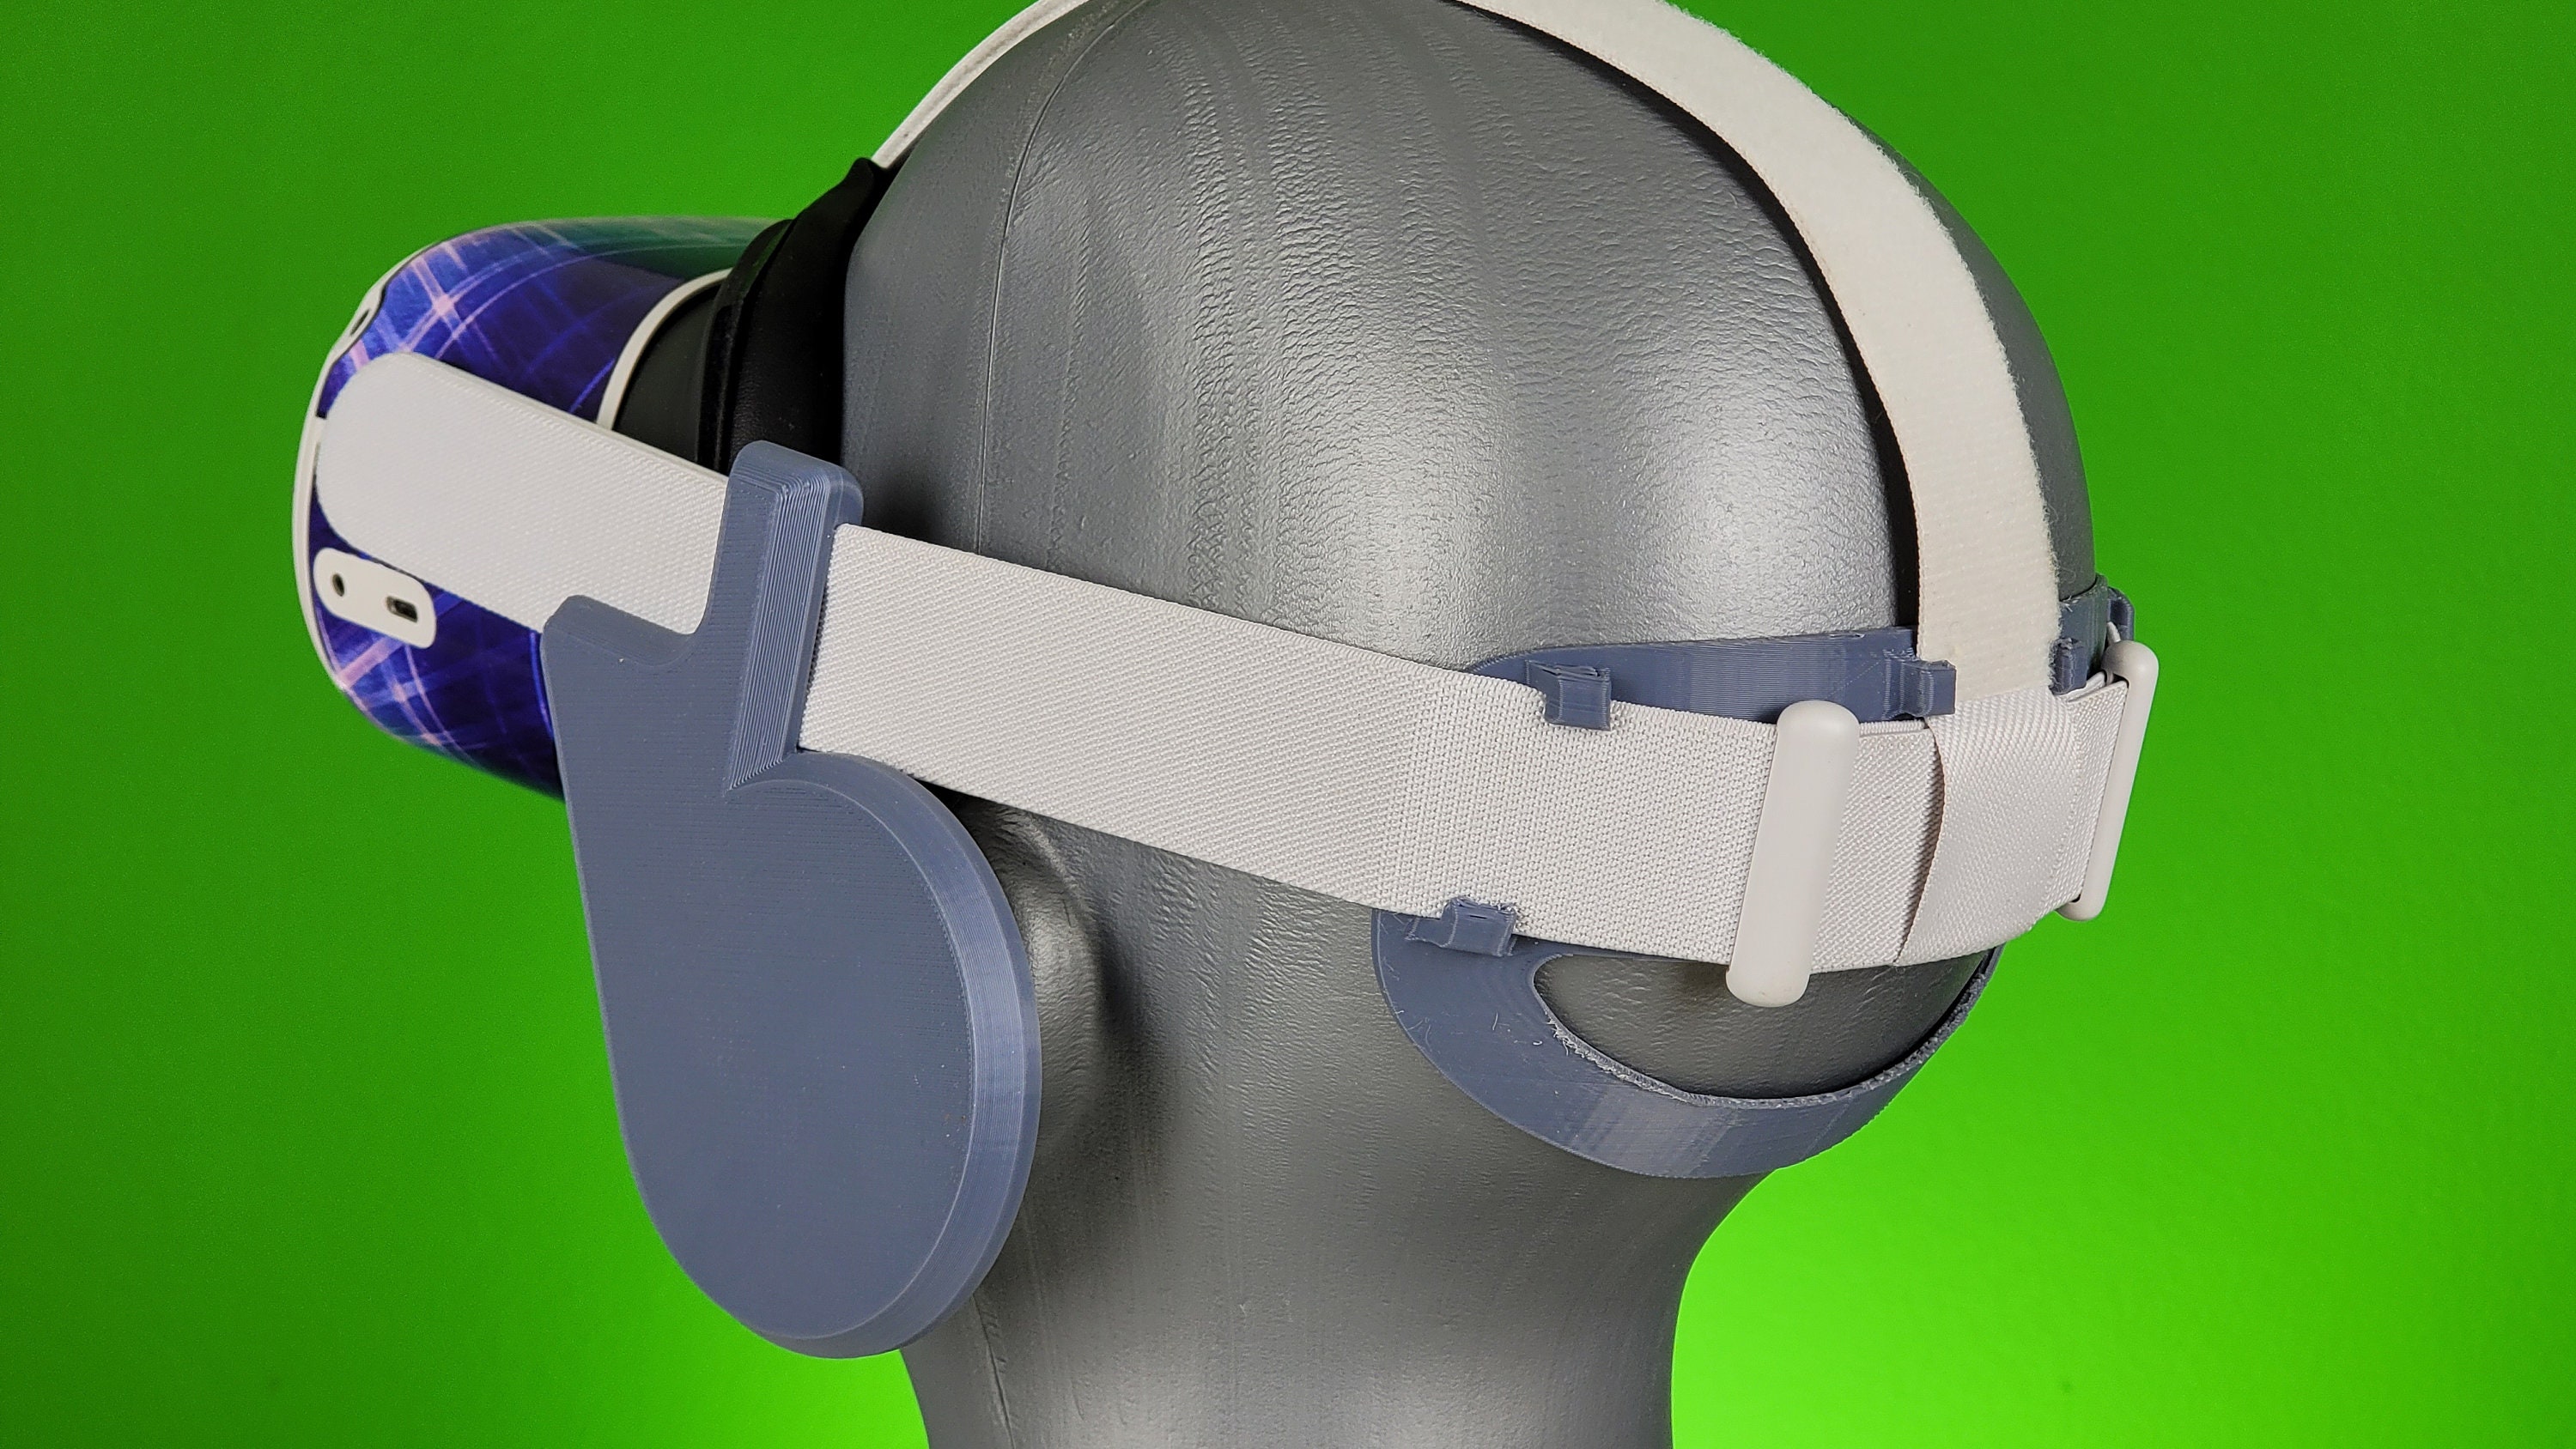 Oculus 2 Audio and Poor Elite Strap - Etsy